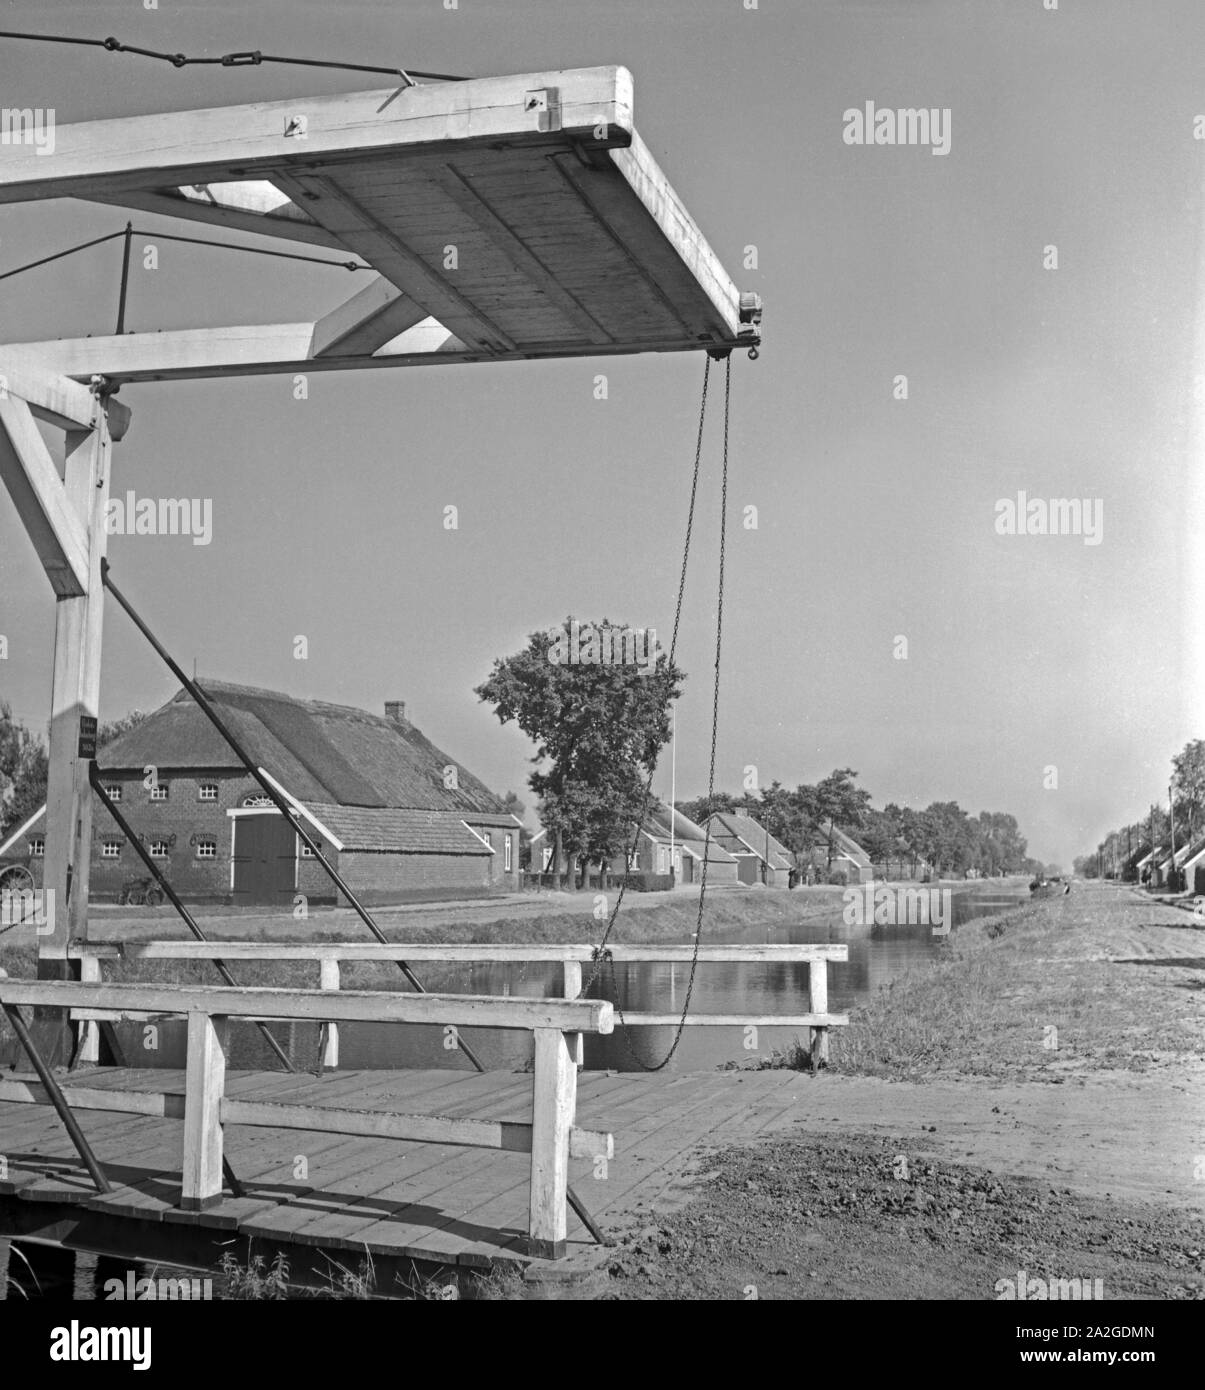 Un Hebebrücke Partie mit einem Kanal en Ostfriesland, Deutschland 1930er Jahre. Impression à un pont de levage en Frise orientale paysage, Allemagne 1930. Banque D'Images